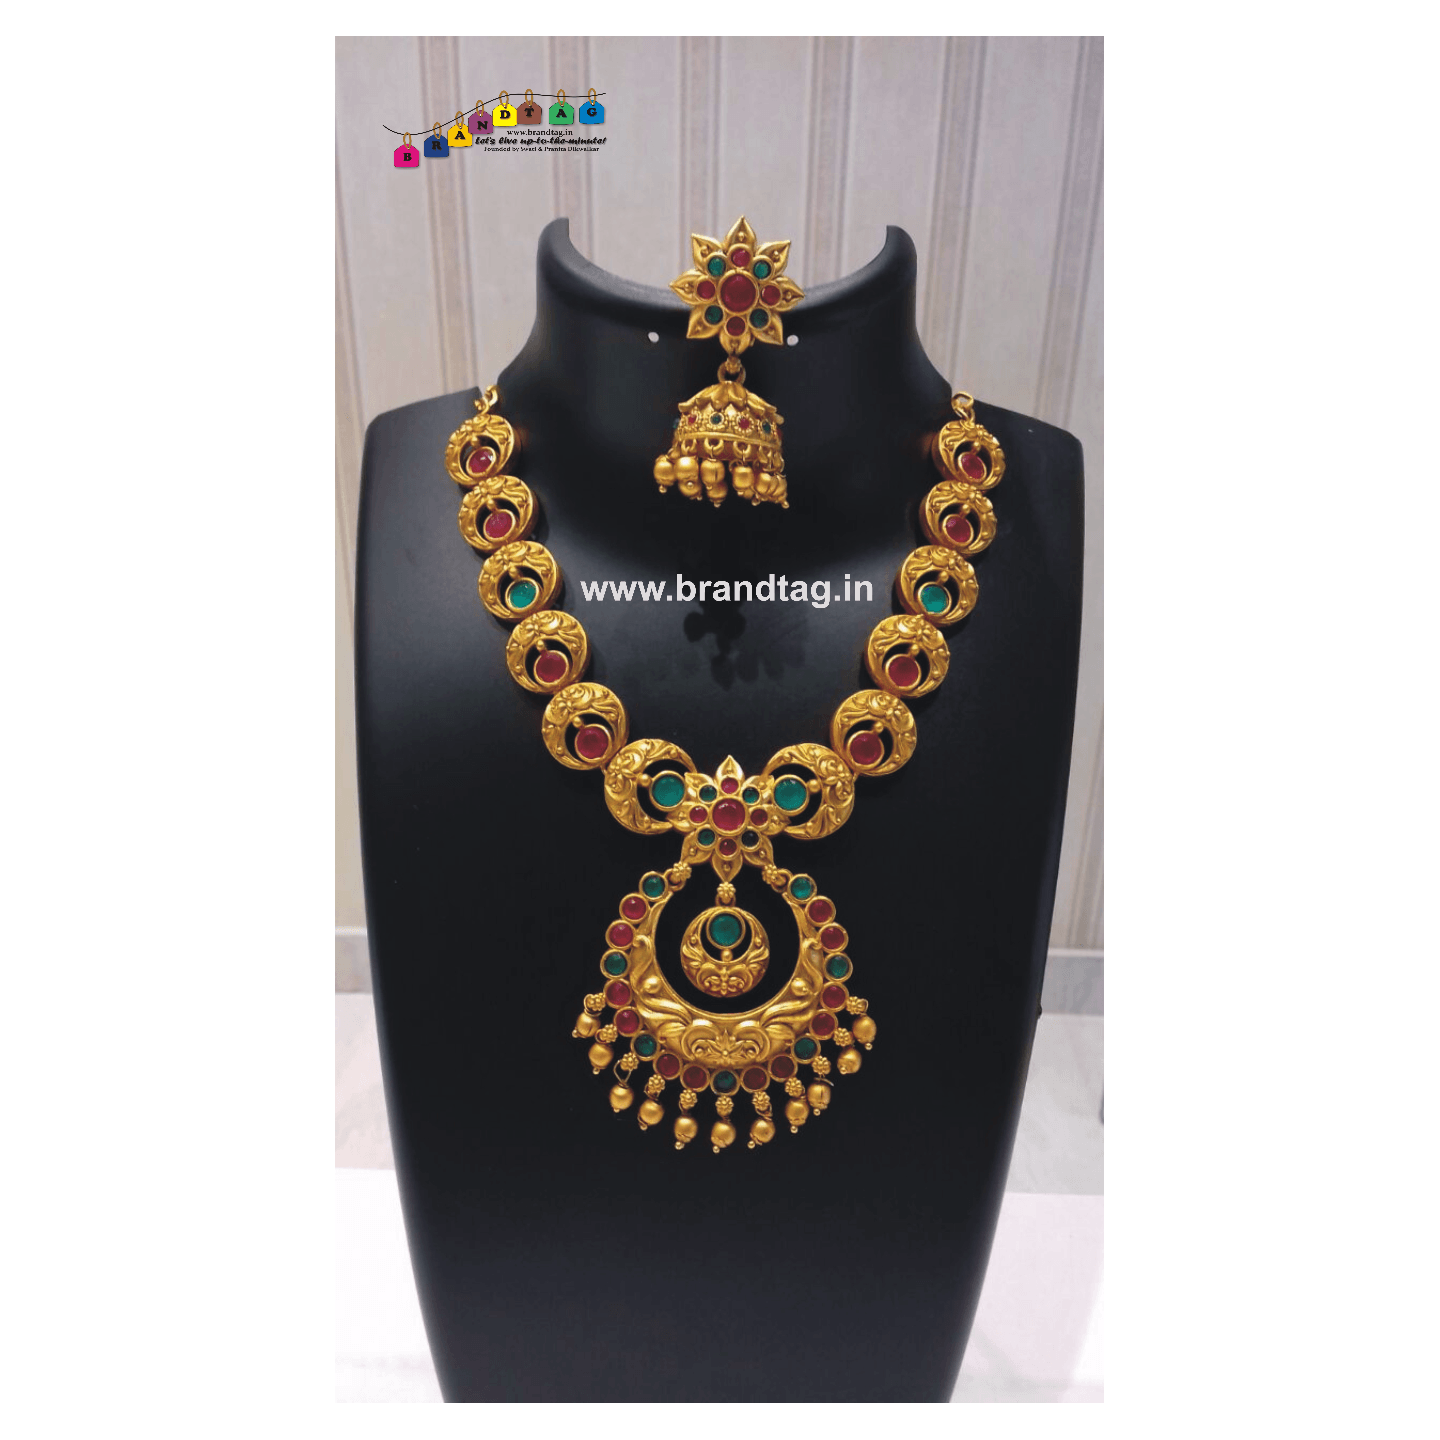 Diwali Collection - Eye pleasing Golden Necklace Set!